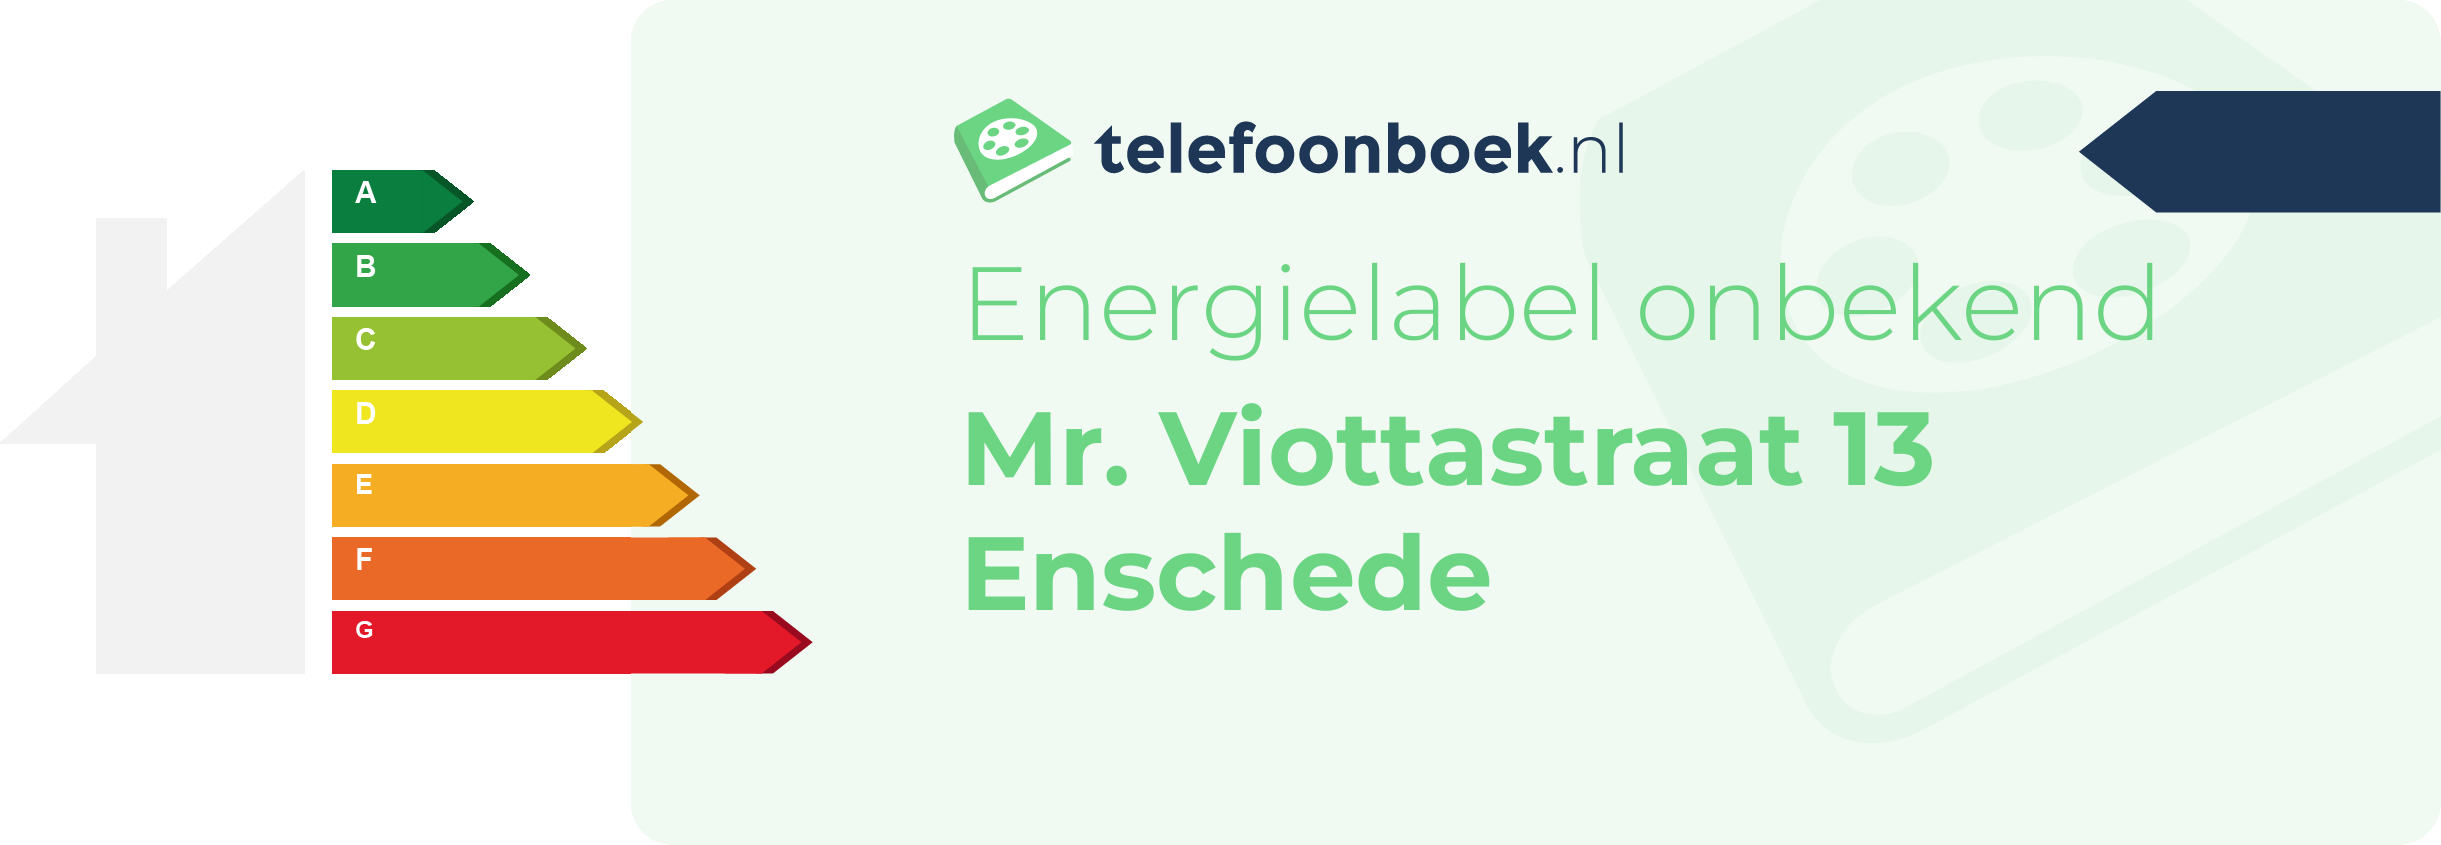 Energielabel Mr. Viottastraat 13 Enschede